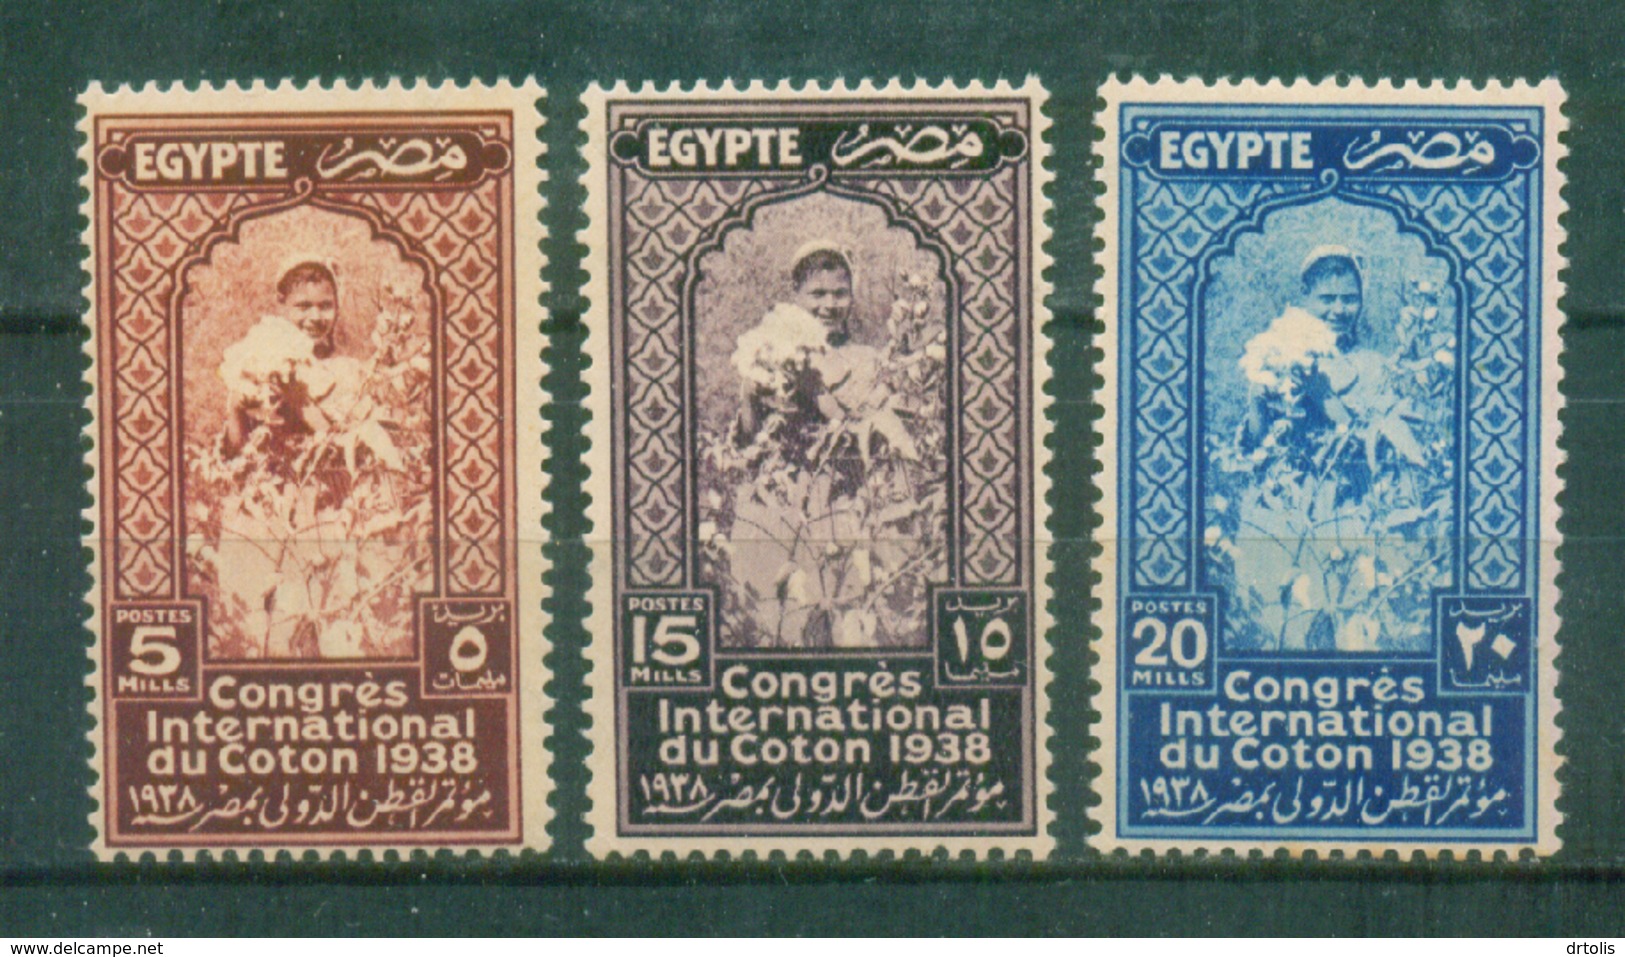 EGYPT / 1938 / INTERNATIONAL COTTON CONGRESS / MNH / VF - Unused Stamps